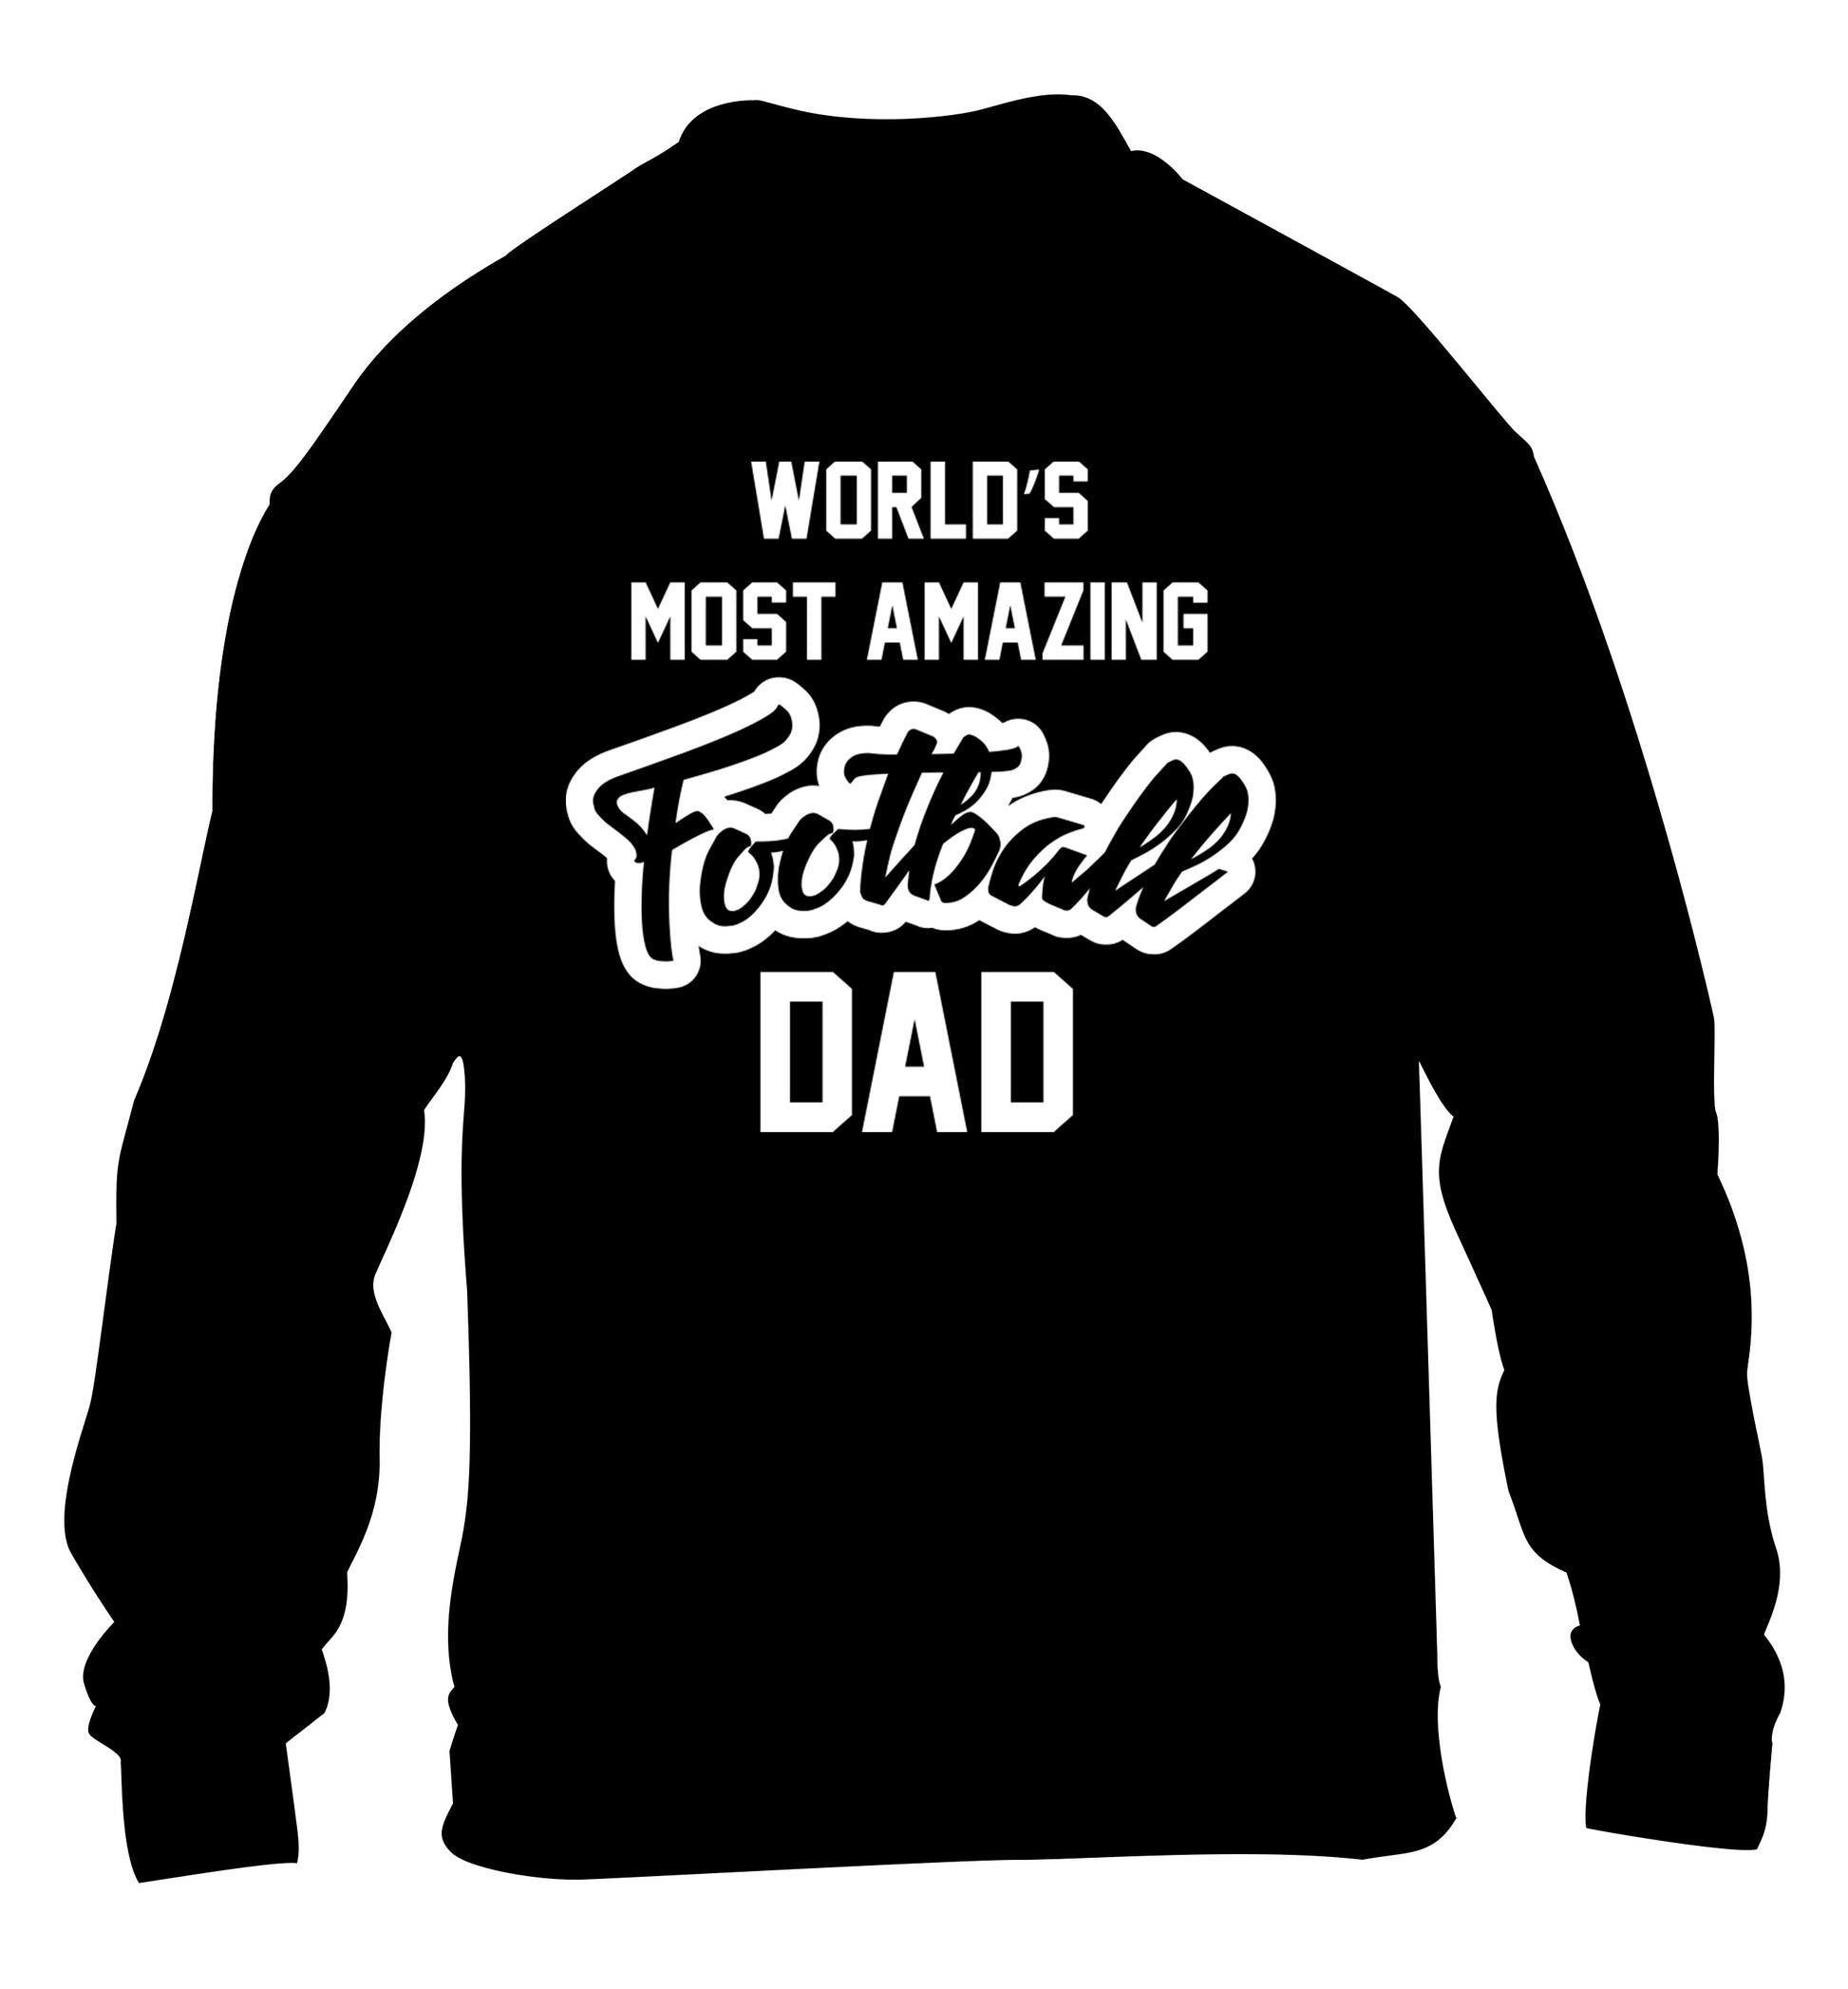 Worlds most amazing football dad children's black sweater 12-14 Years